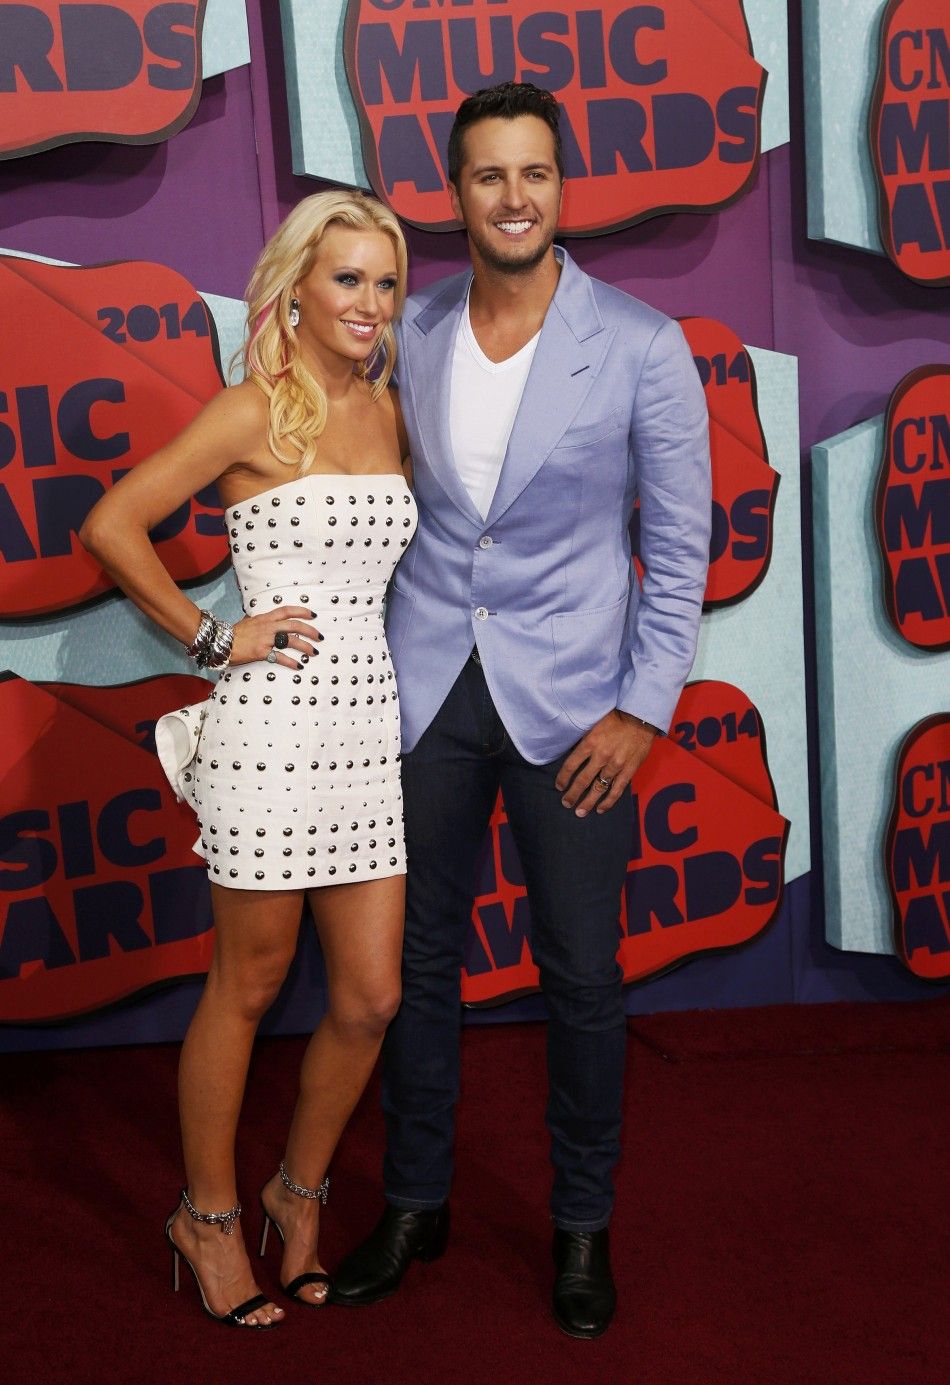 Caroline Boyer and Luke Bryan arrive at the 2014 CMT Music Awards in Nashville